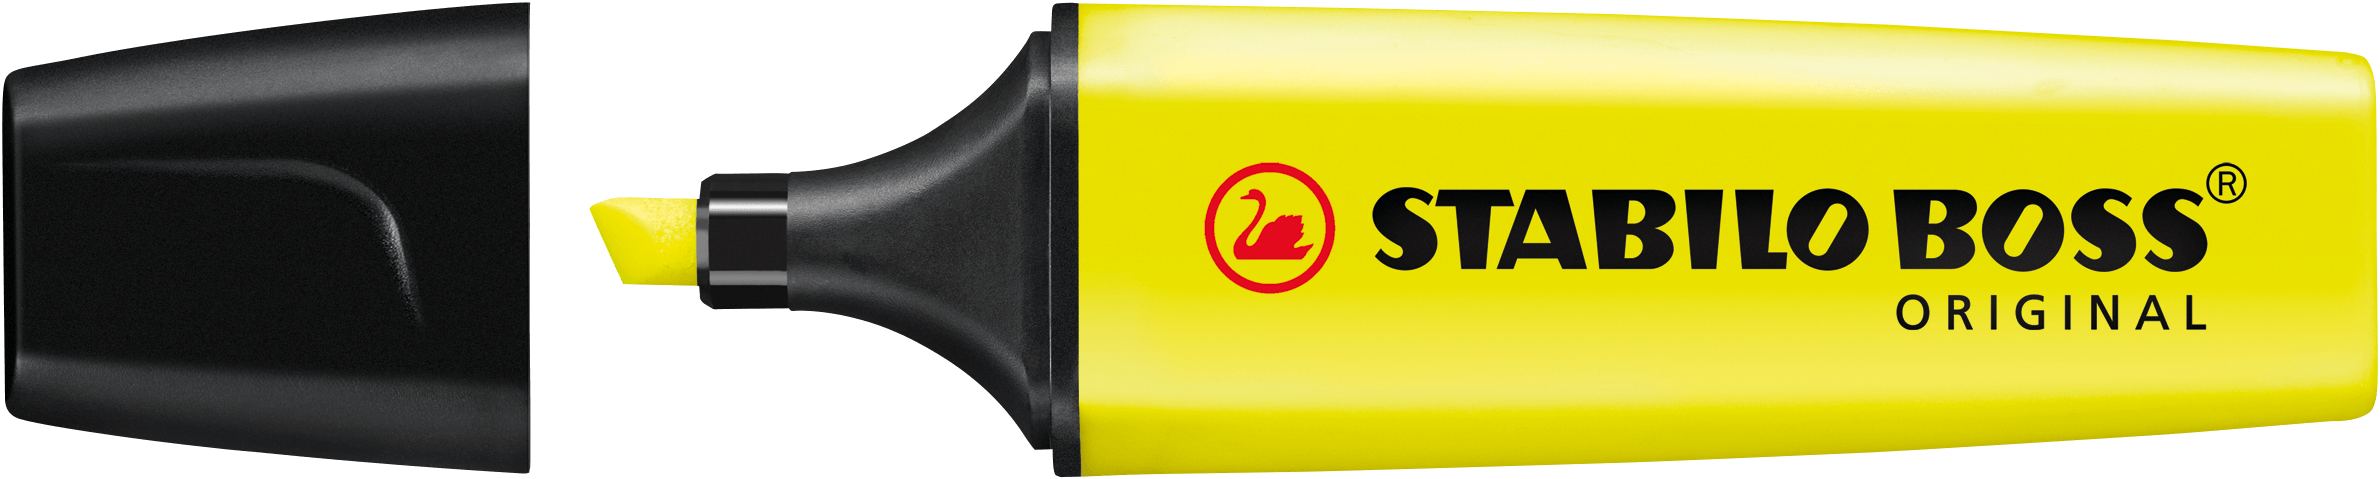 STABILO BOSS ORIGINAL: Textmarker Werbemittel als Products - bedrucken Promotion STABILO